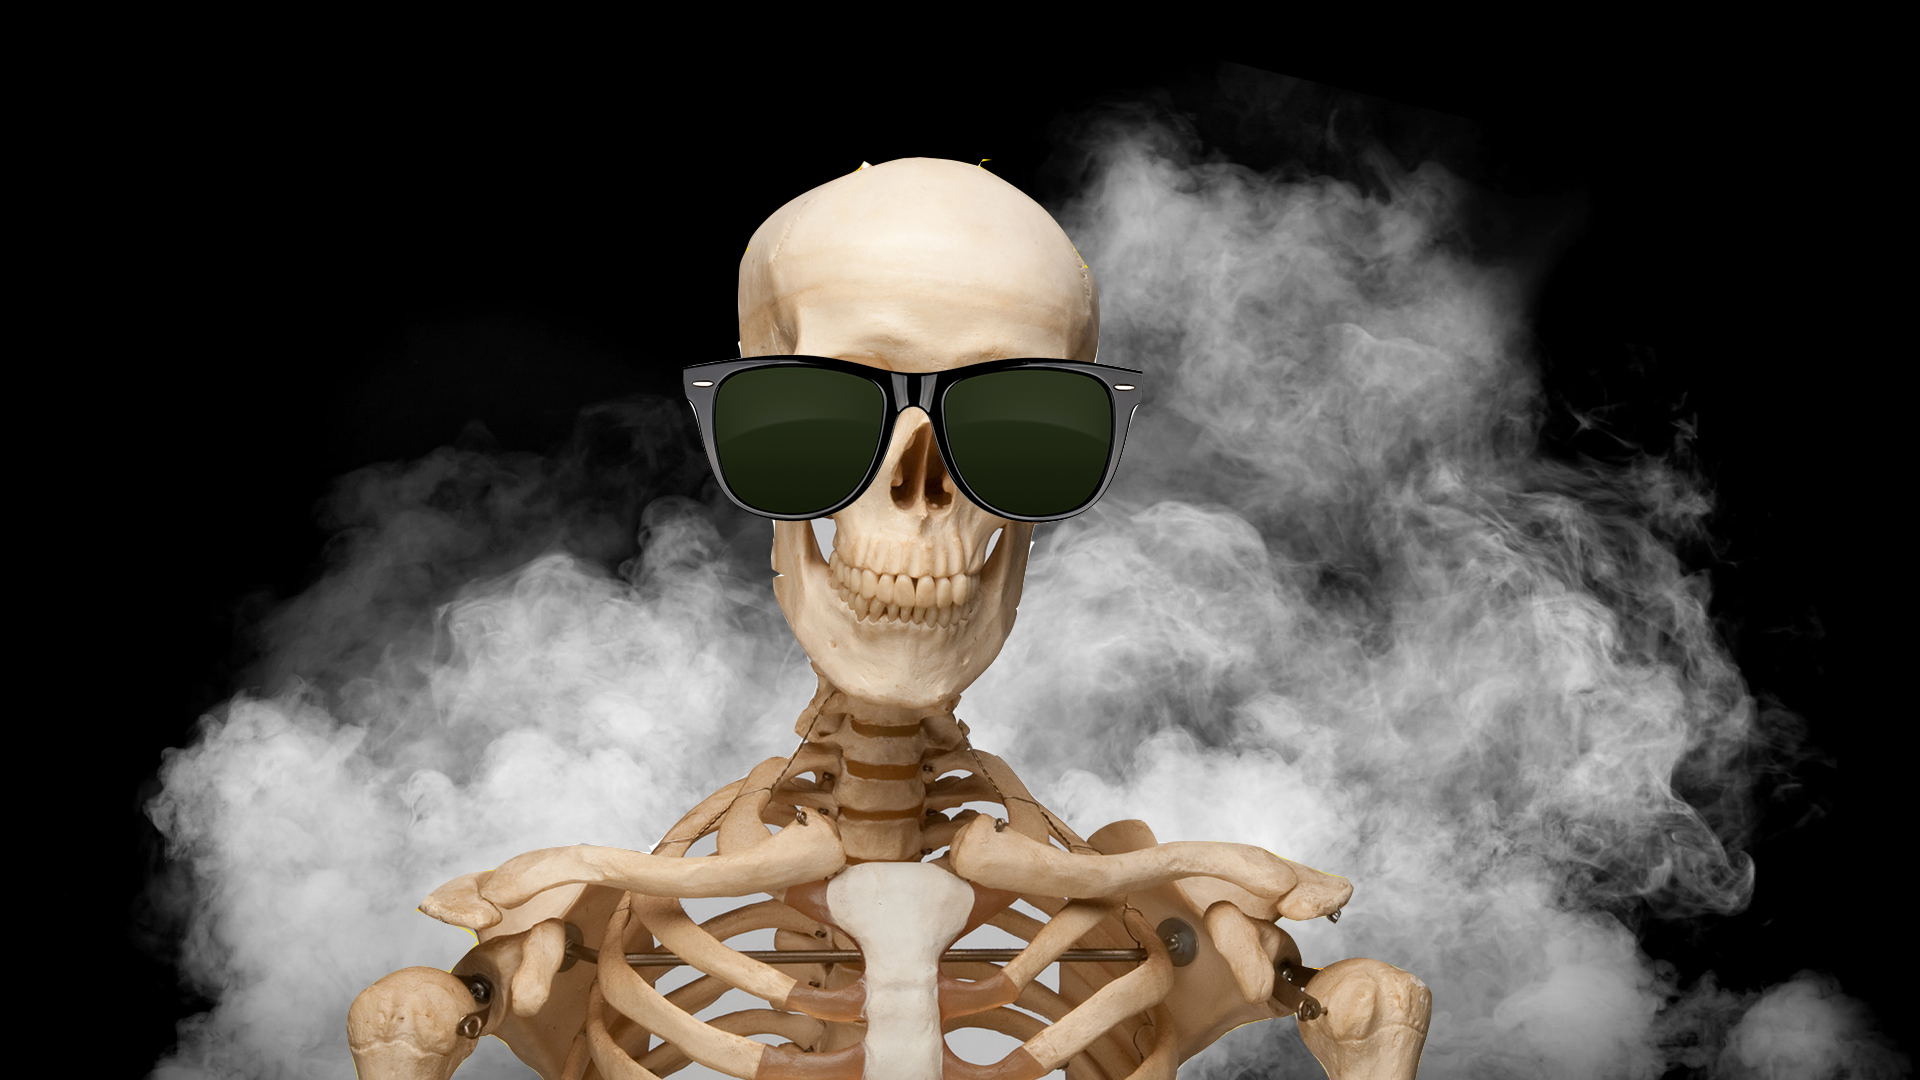 Grinning skeleton wearing dark sunglasses